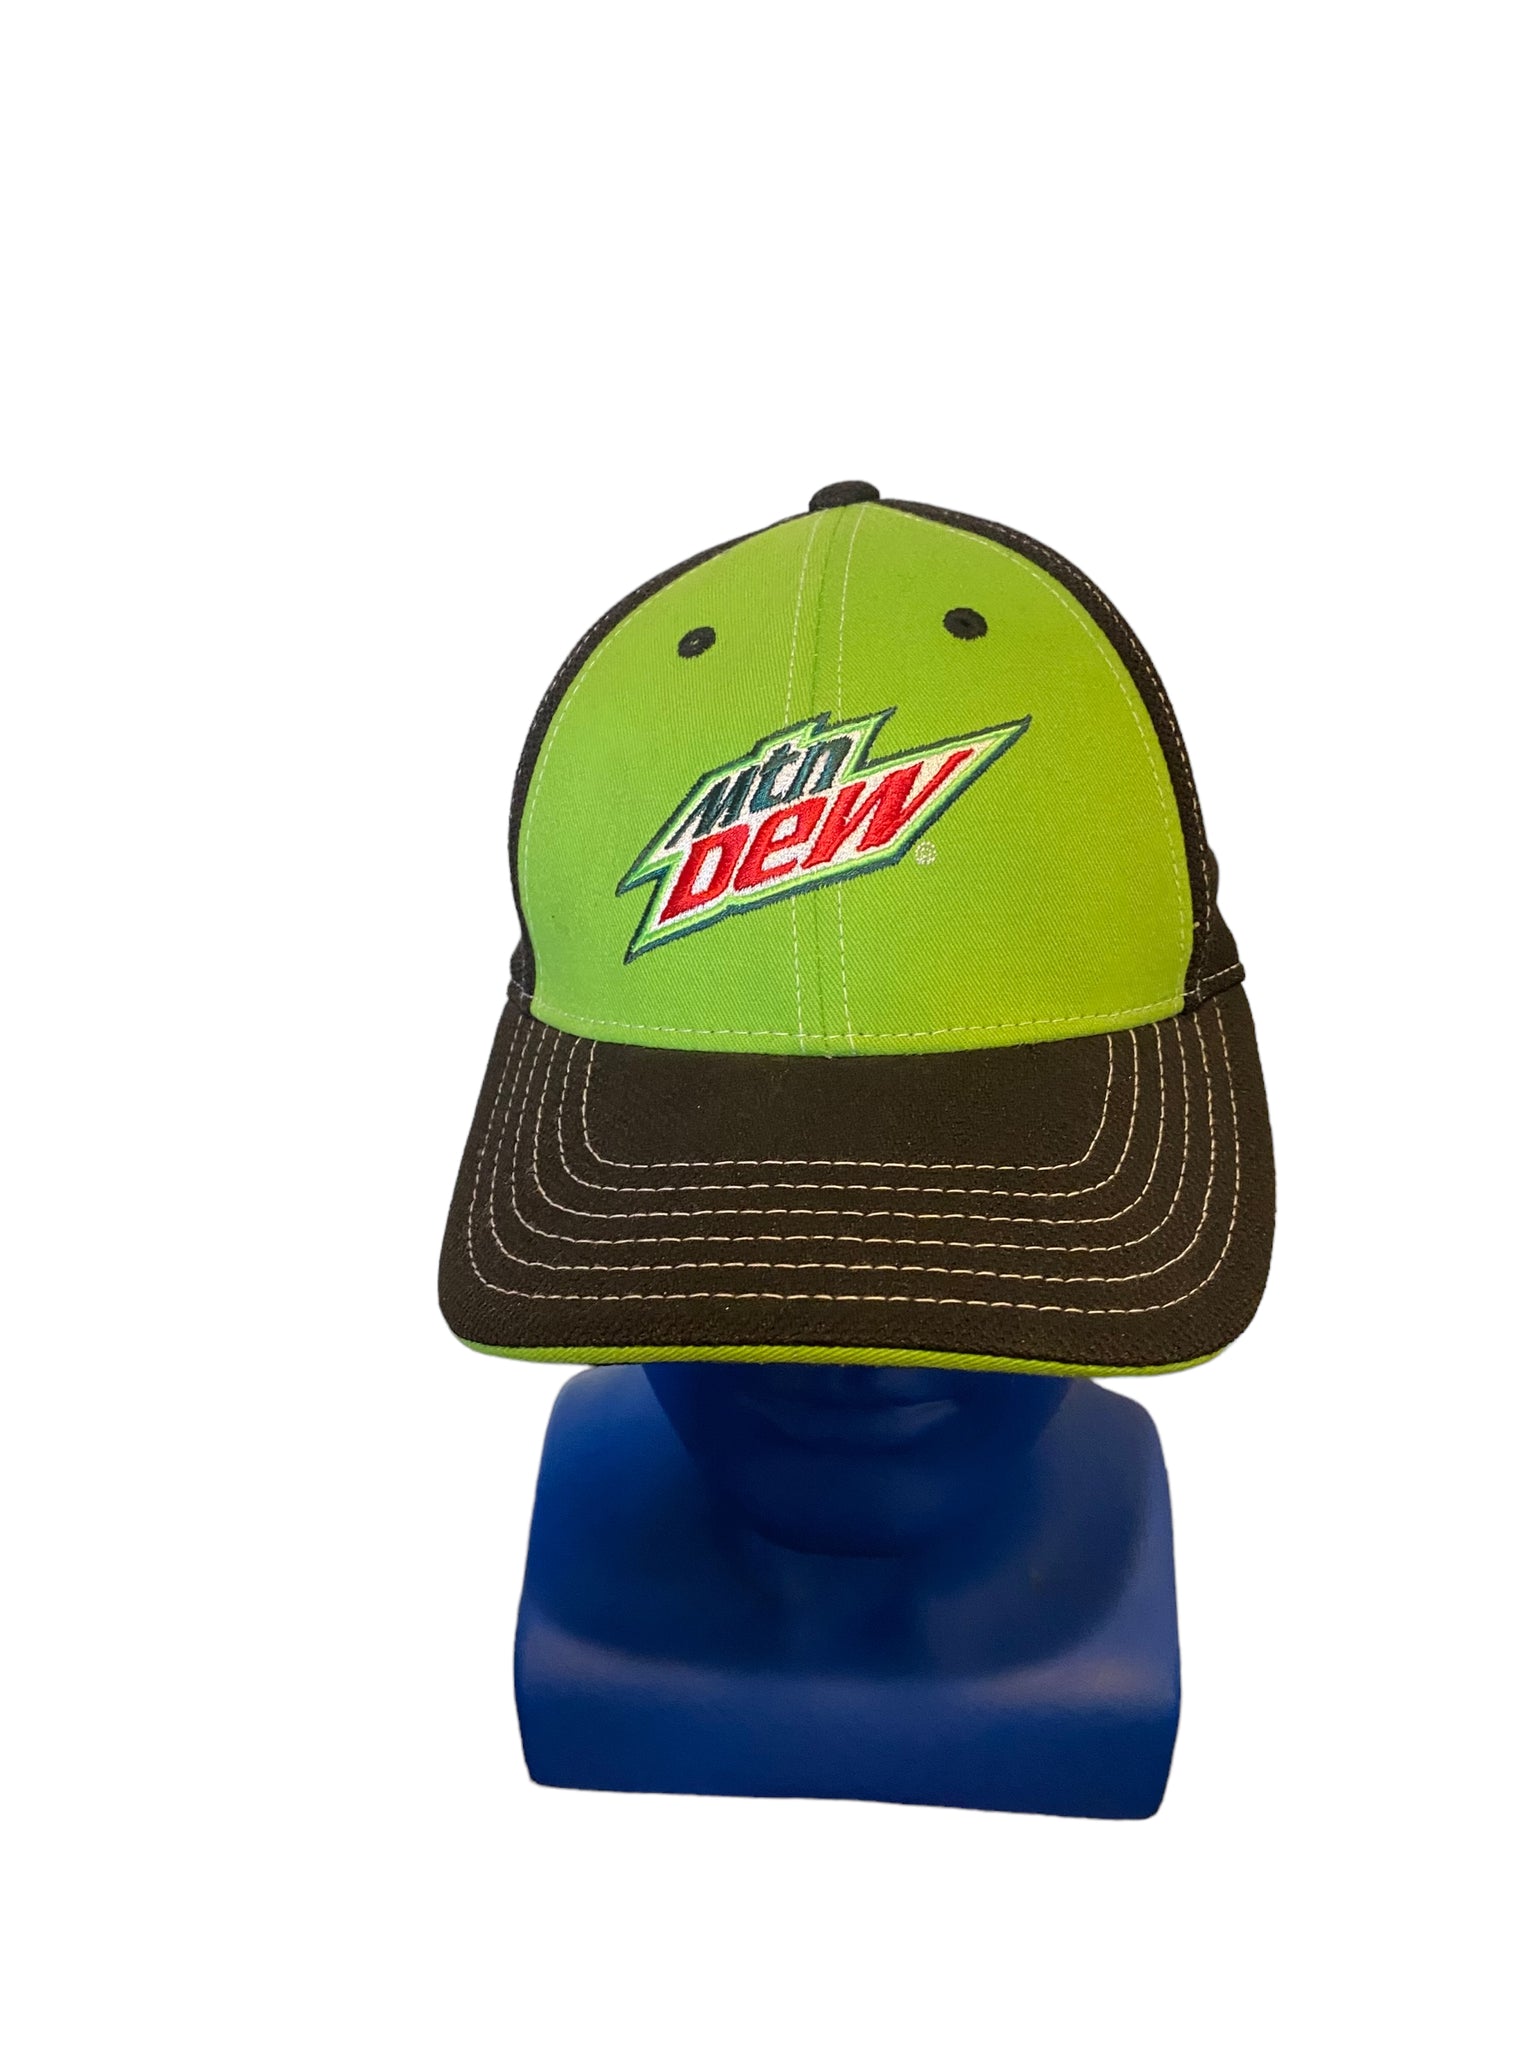 Mtn dew hendrick motorsports nascar hat